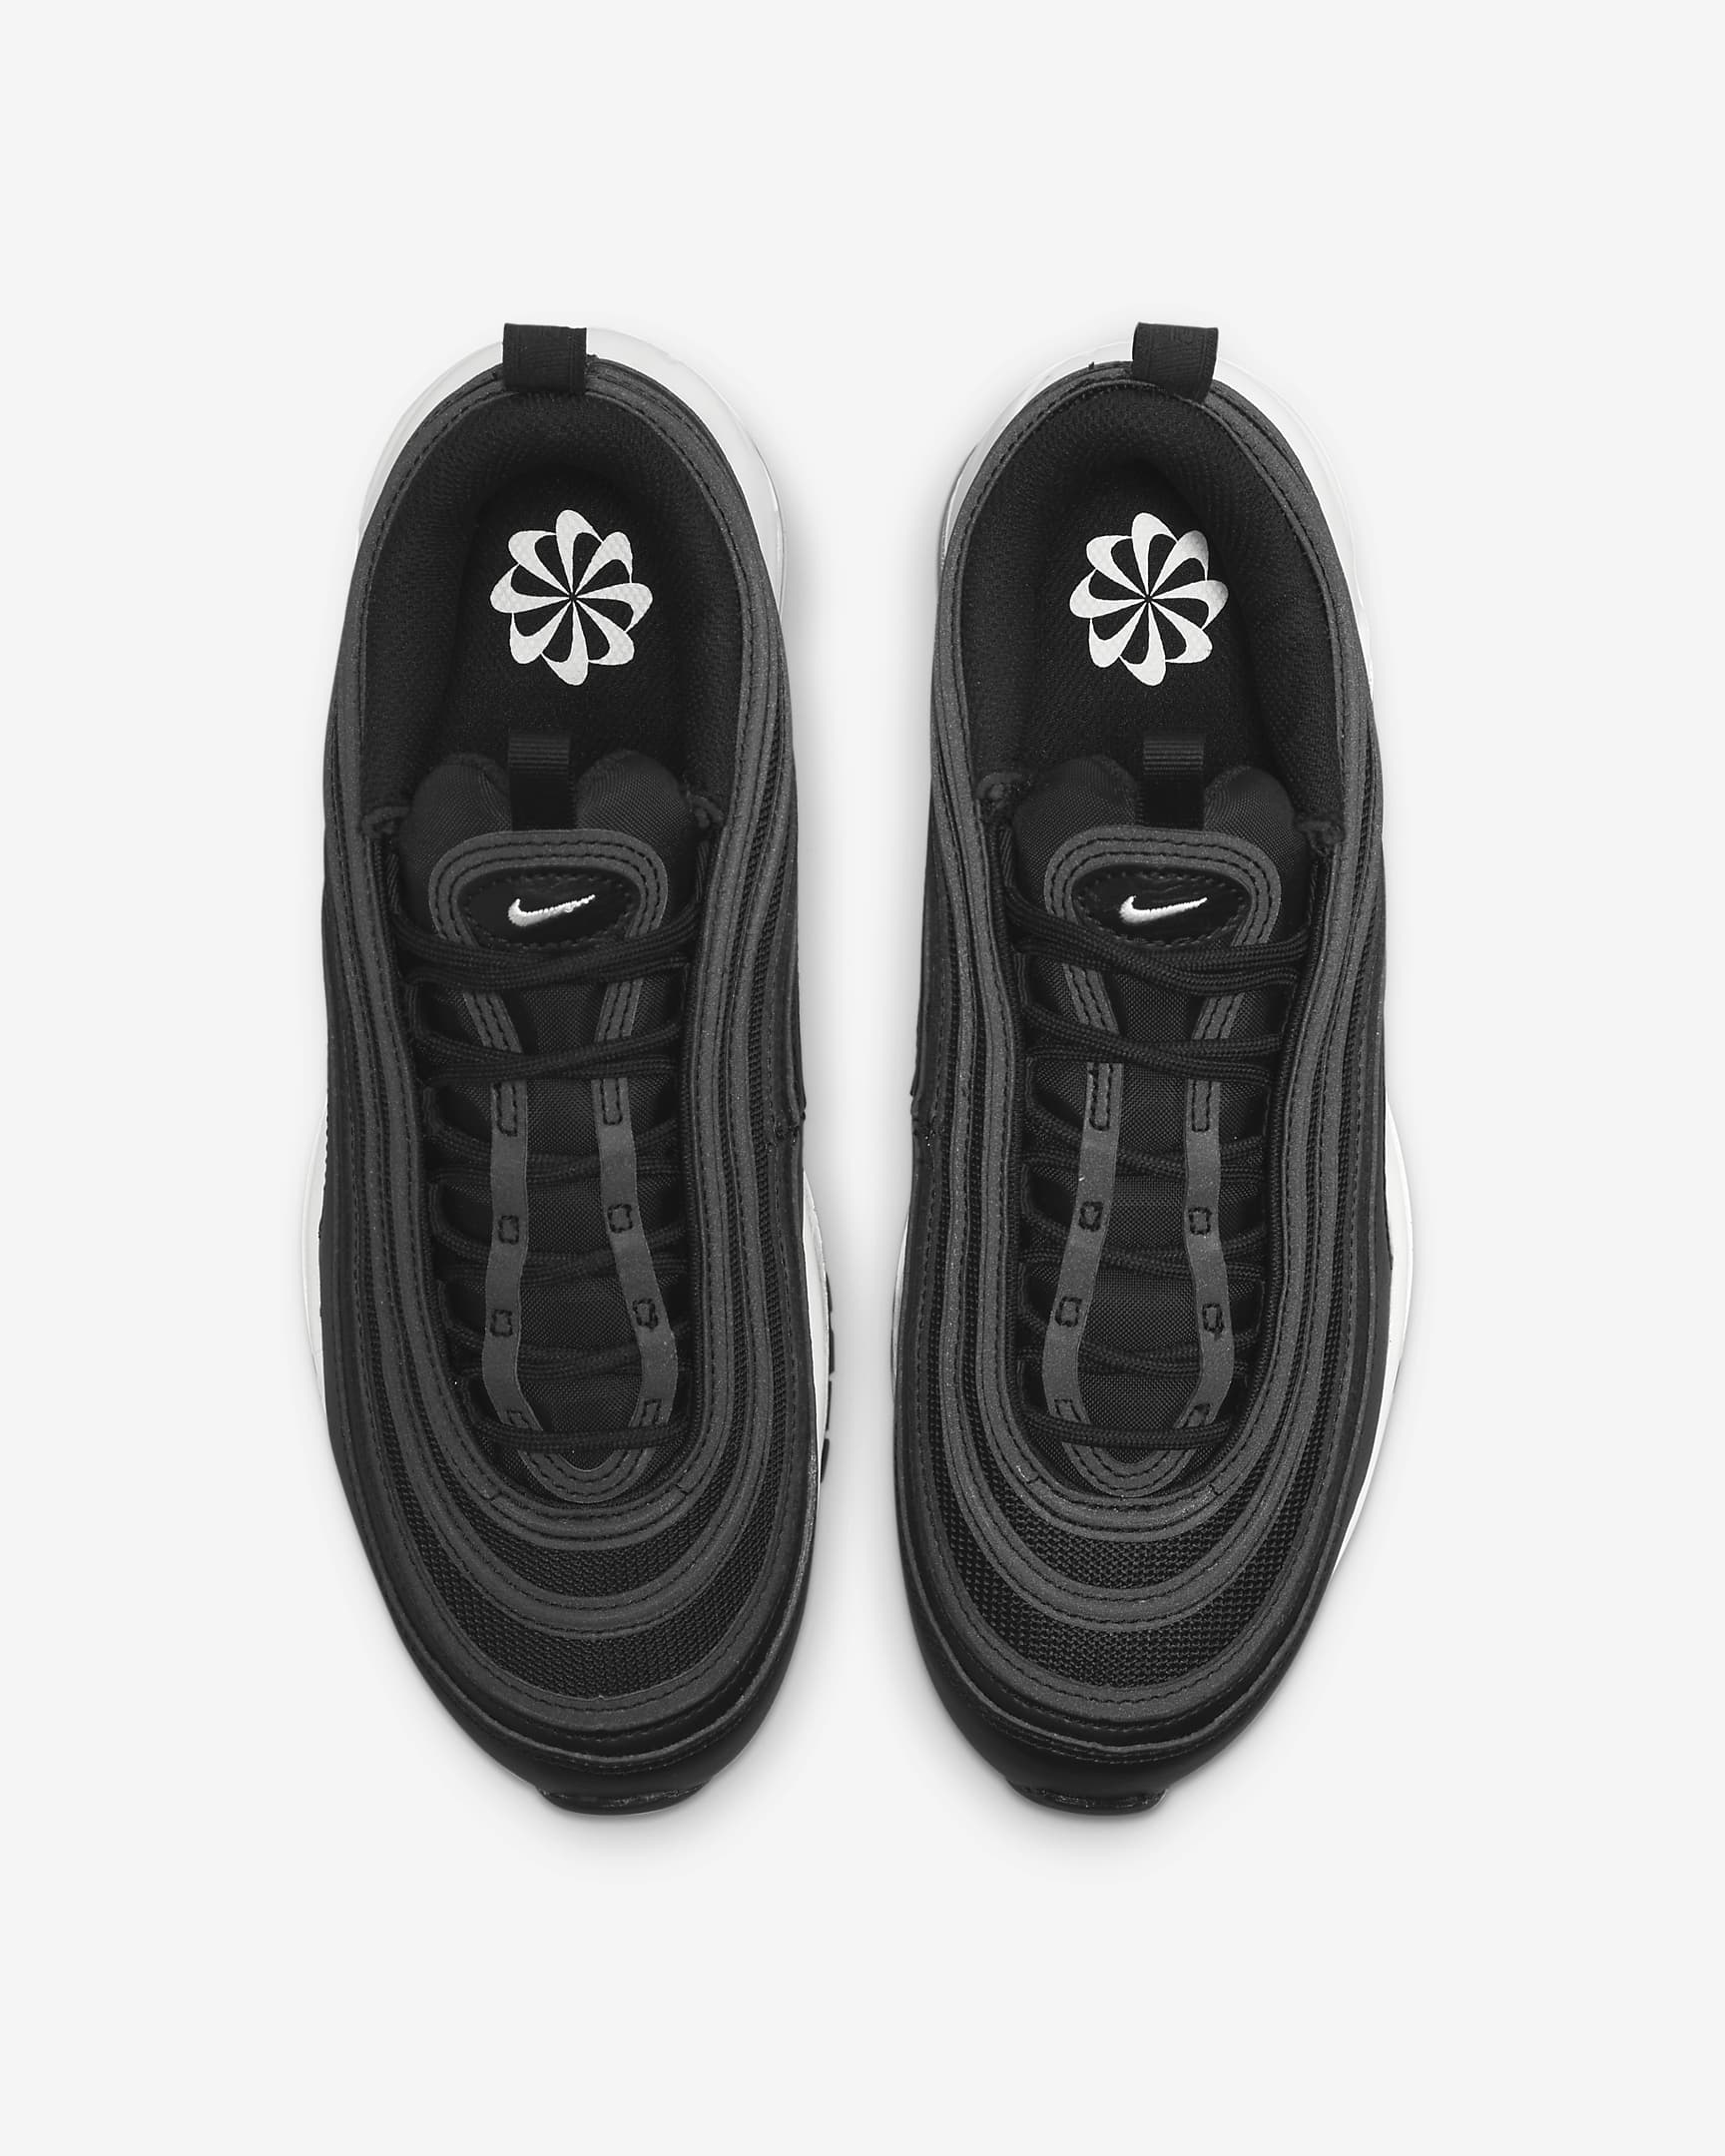 Nike Air Max 97 Women's Shoes - Black/Black/White